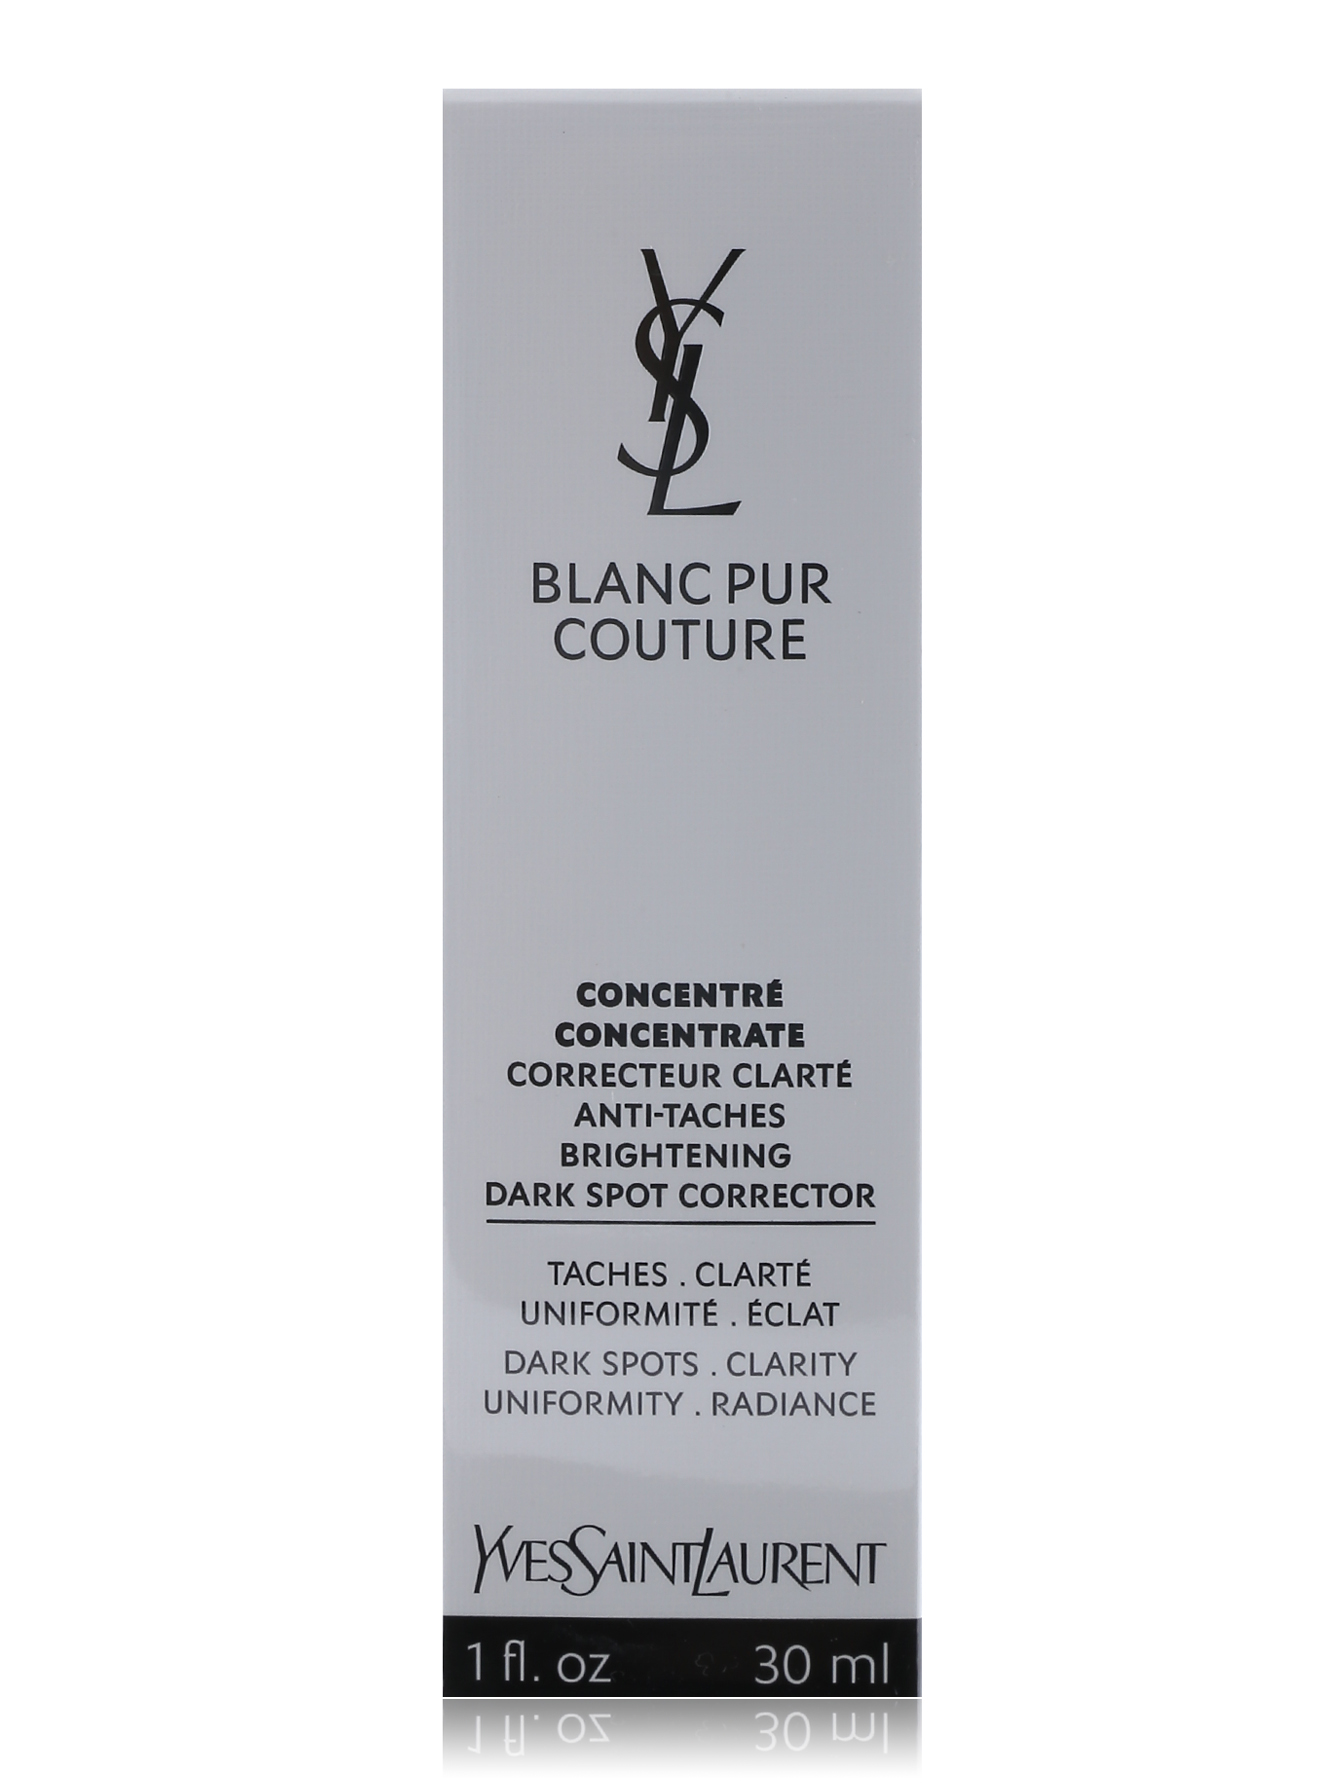  Концентрат-сыворотка для лица - Blanc Pur Couture, 30ml - Обтравка1